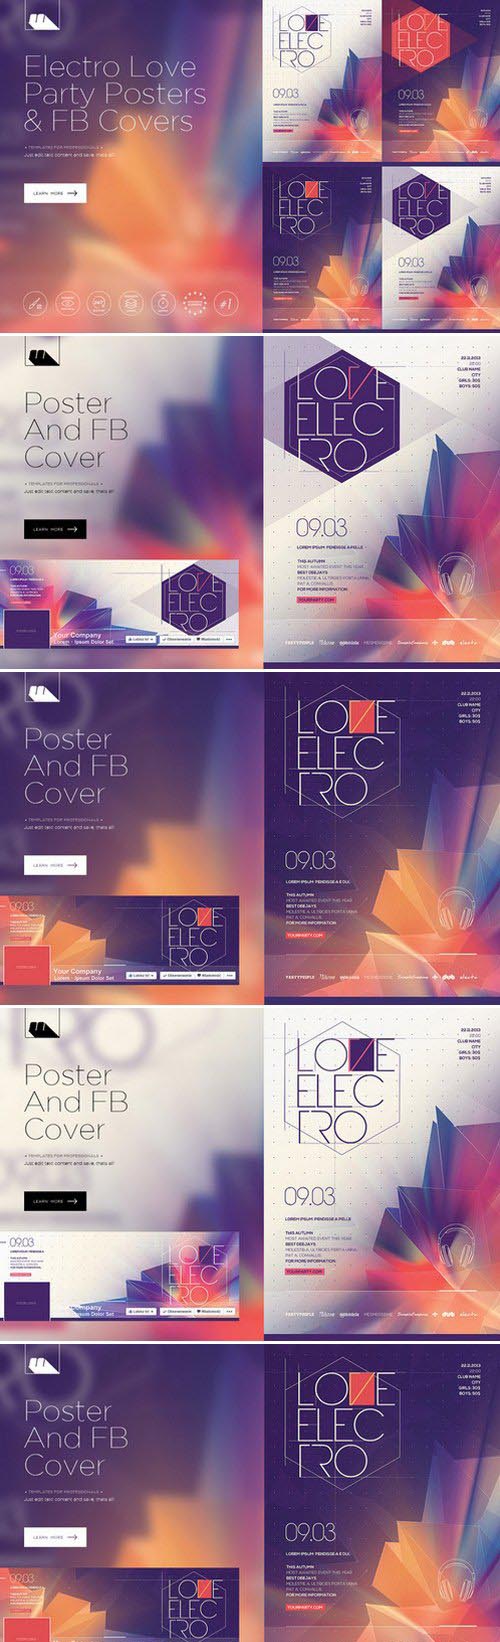 CM - Electro Love 04 Posters